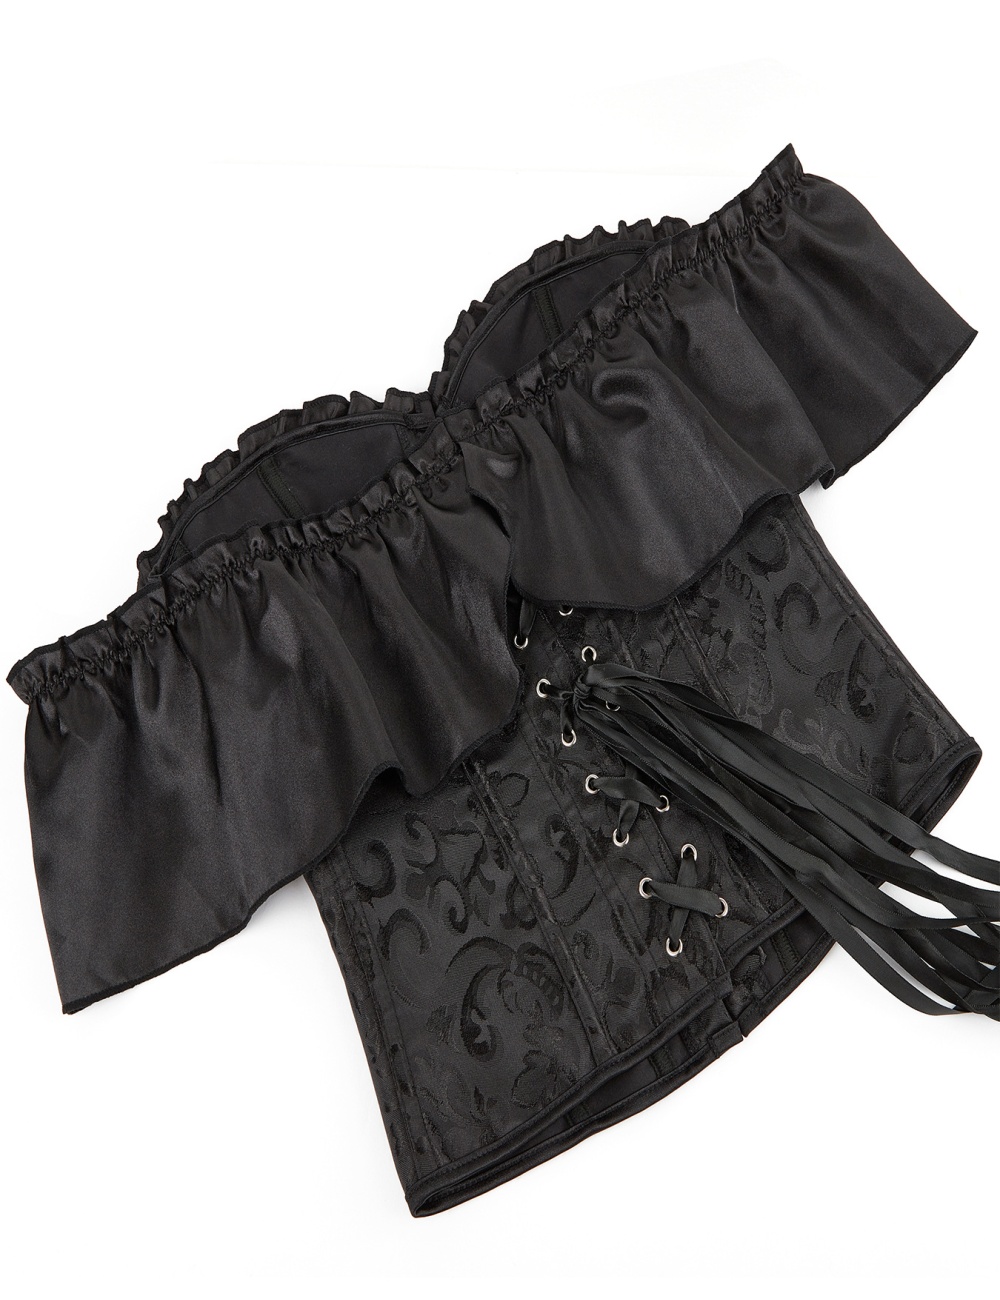 Retro court style corset wrapped chest European style tops